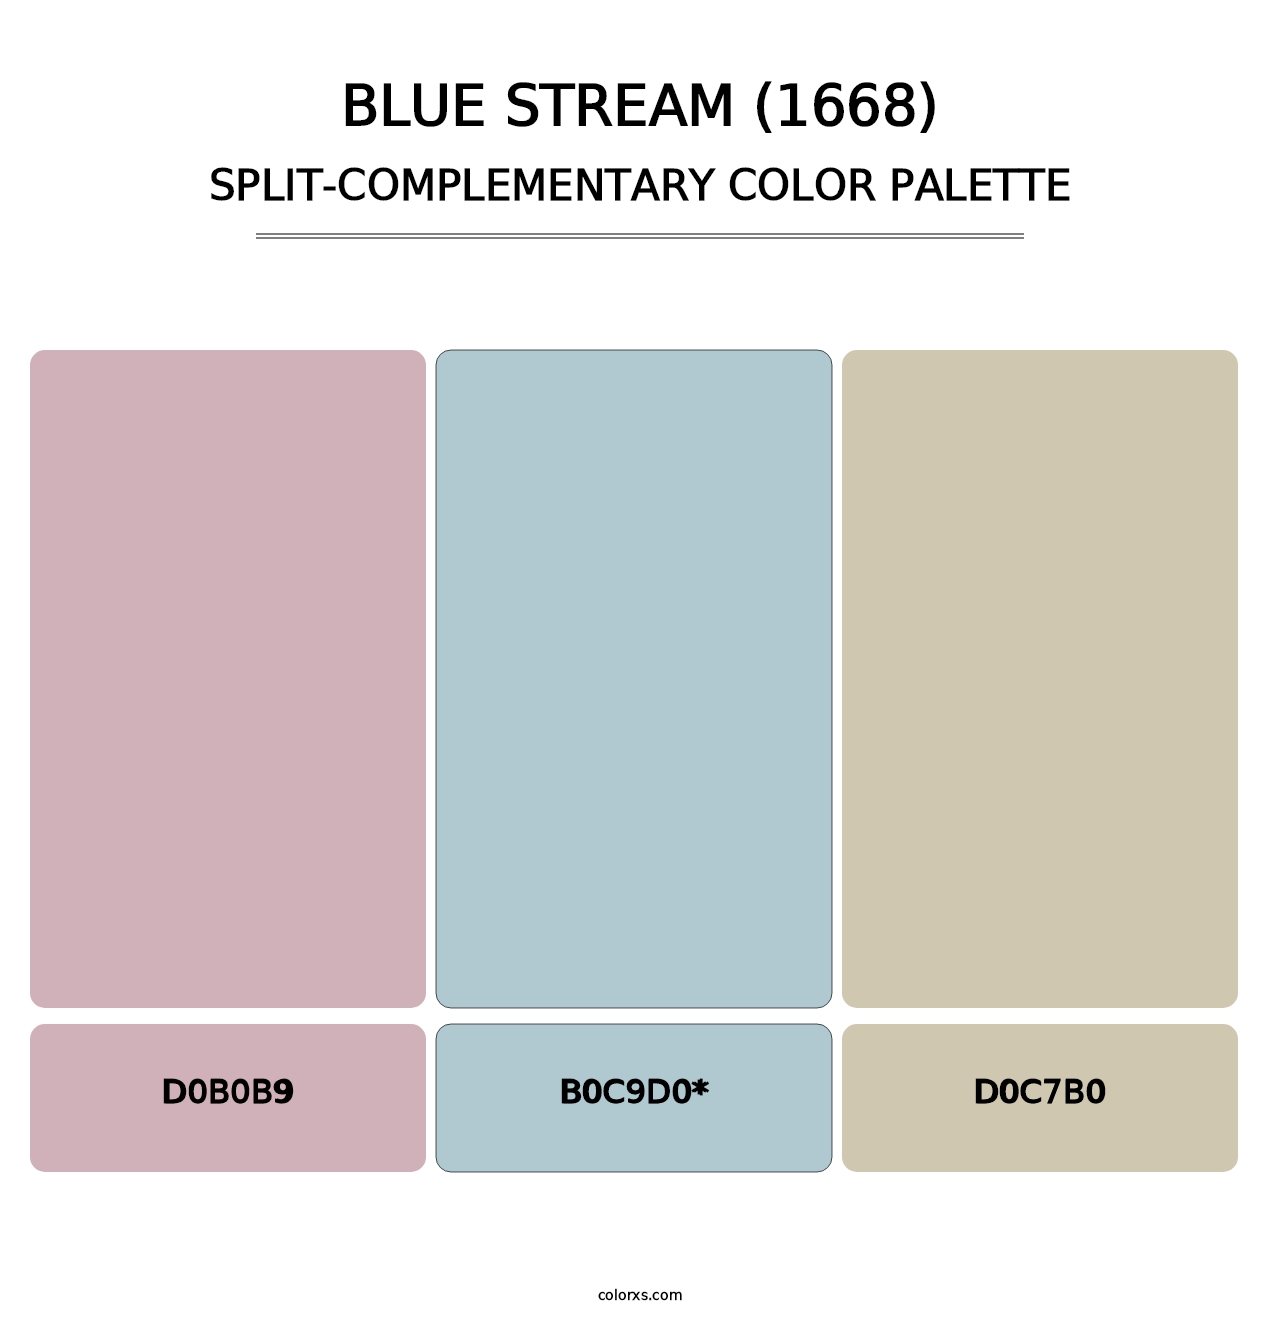 Blue Stream (1668) - Split-Complementary Color Palette